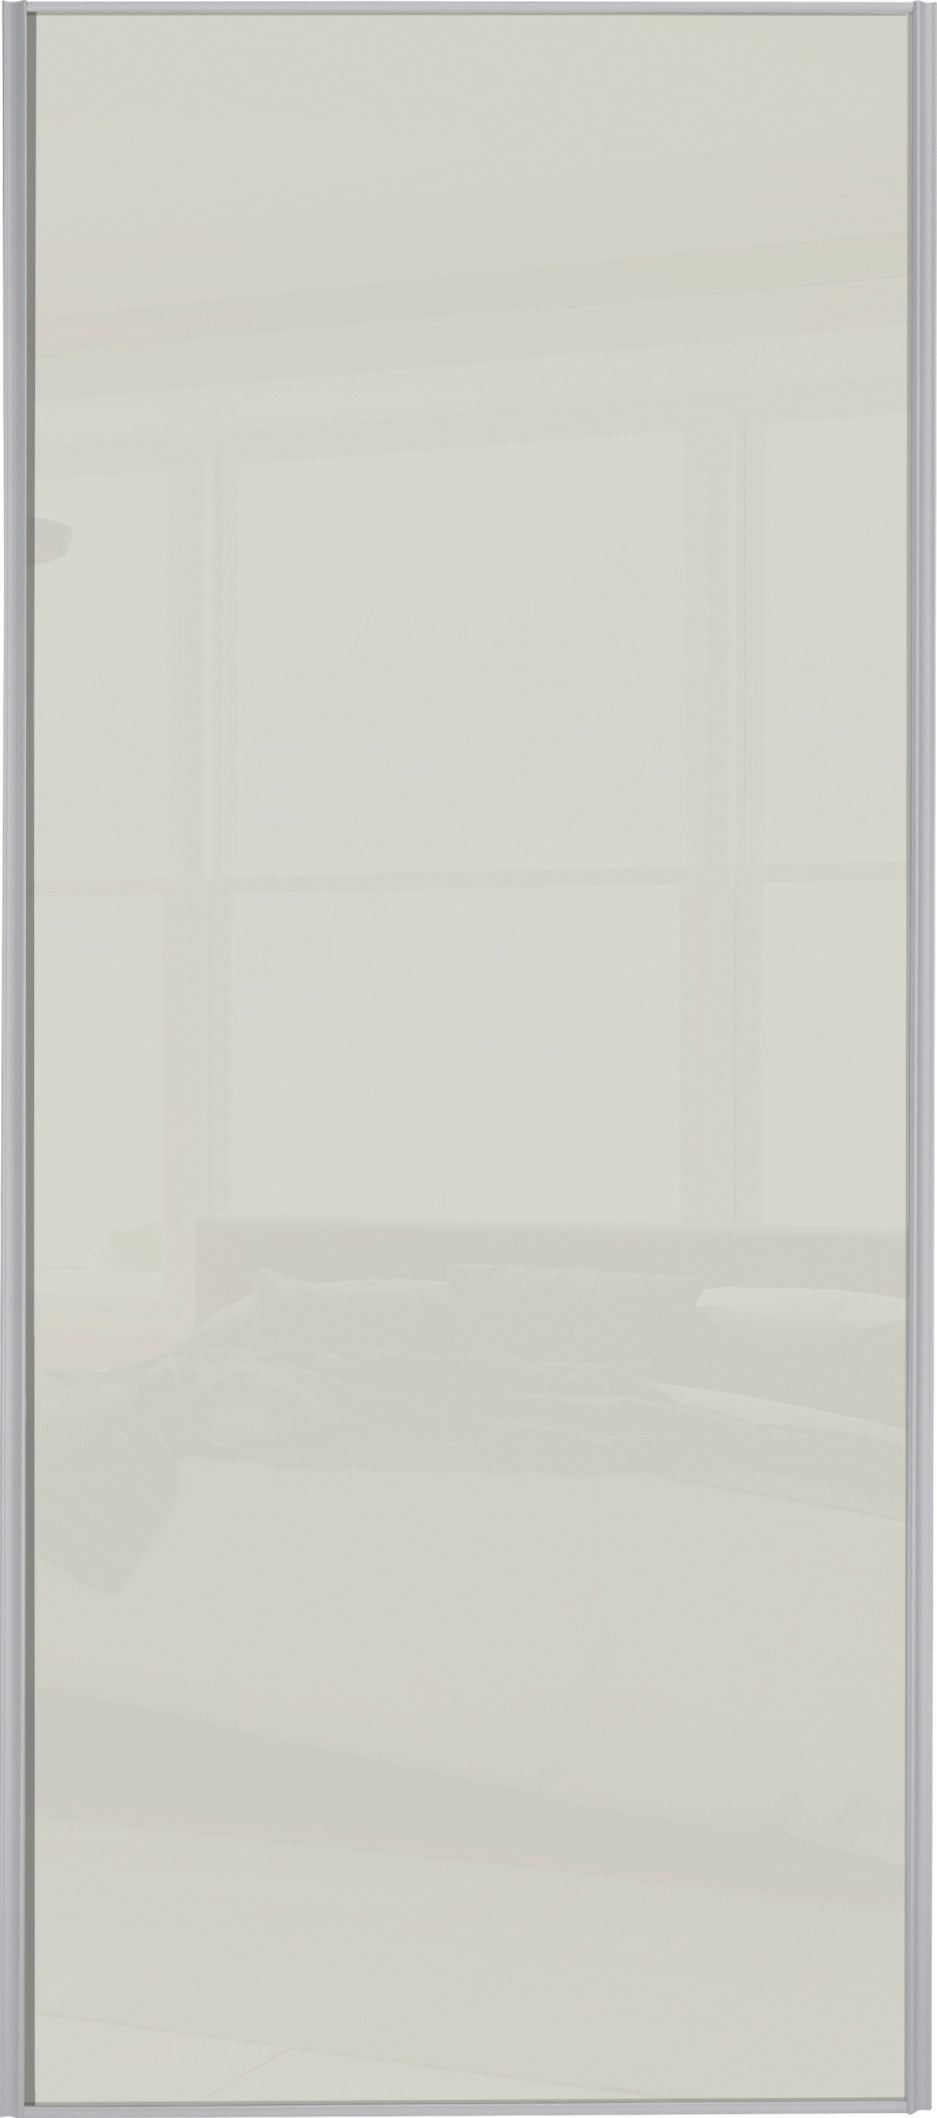 Image of Spacepro Sliding Wardrobe Door Silver Framed Single Panel Arctic White Glass - 2220 x 914mm